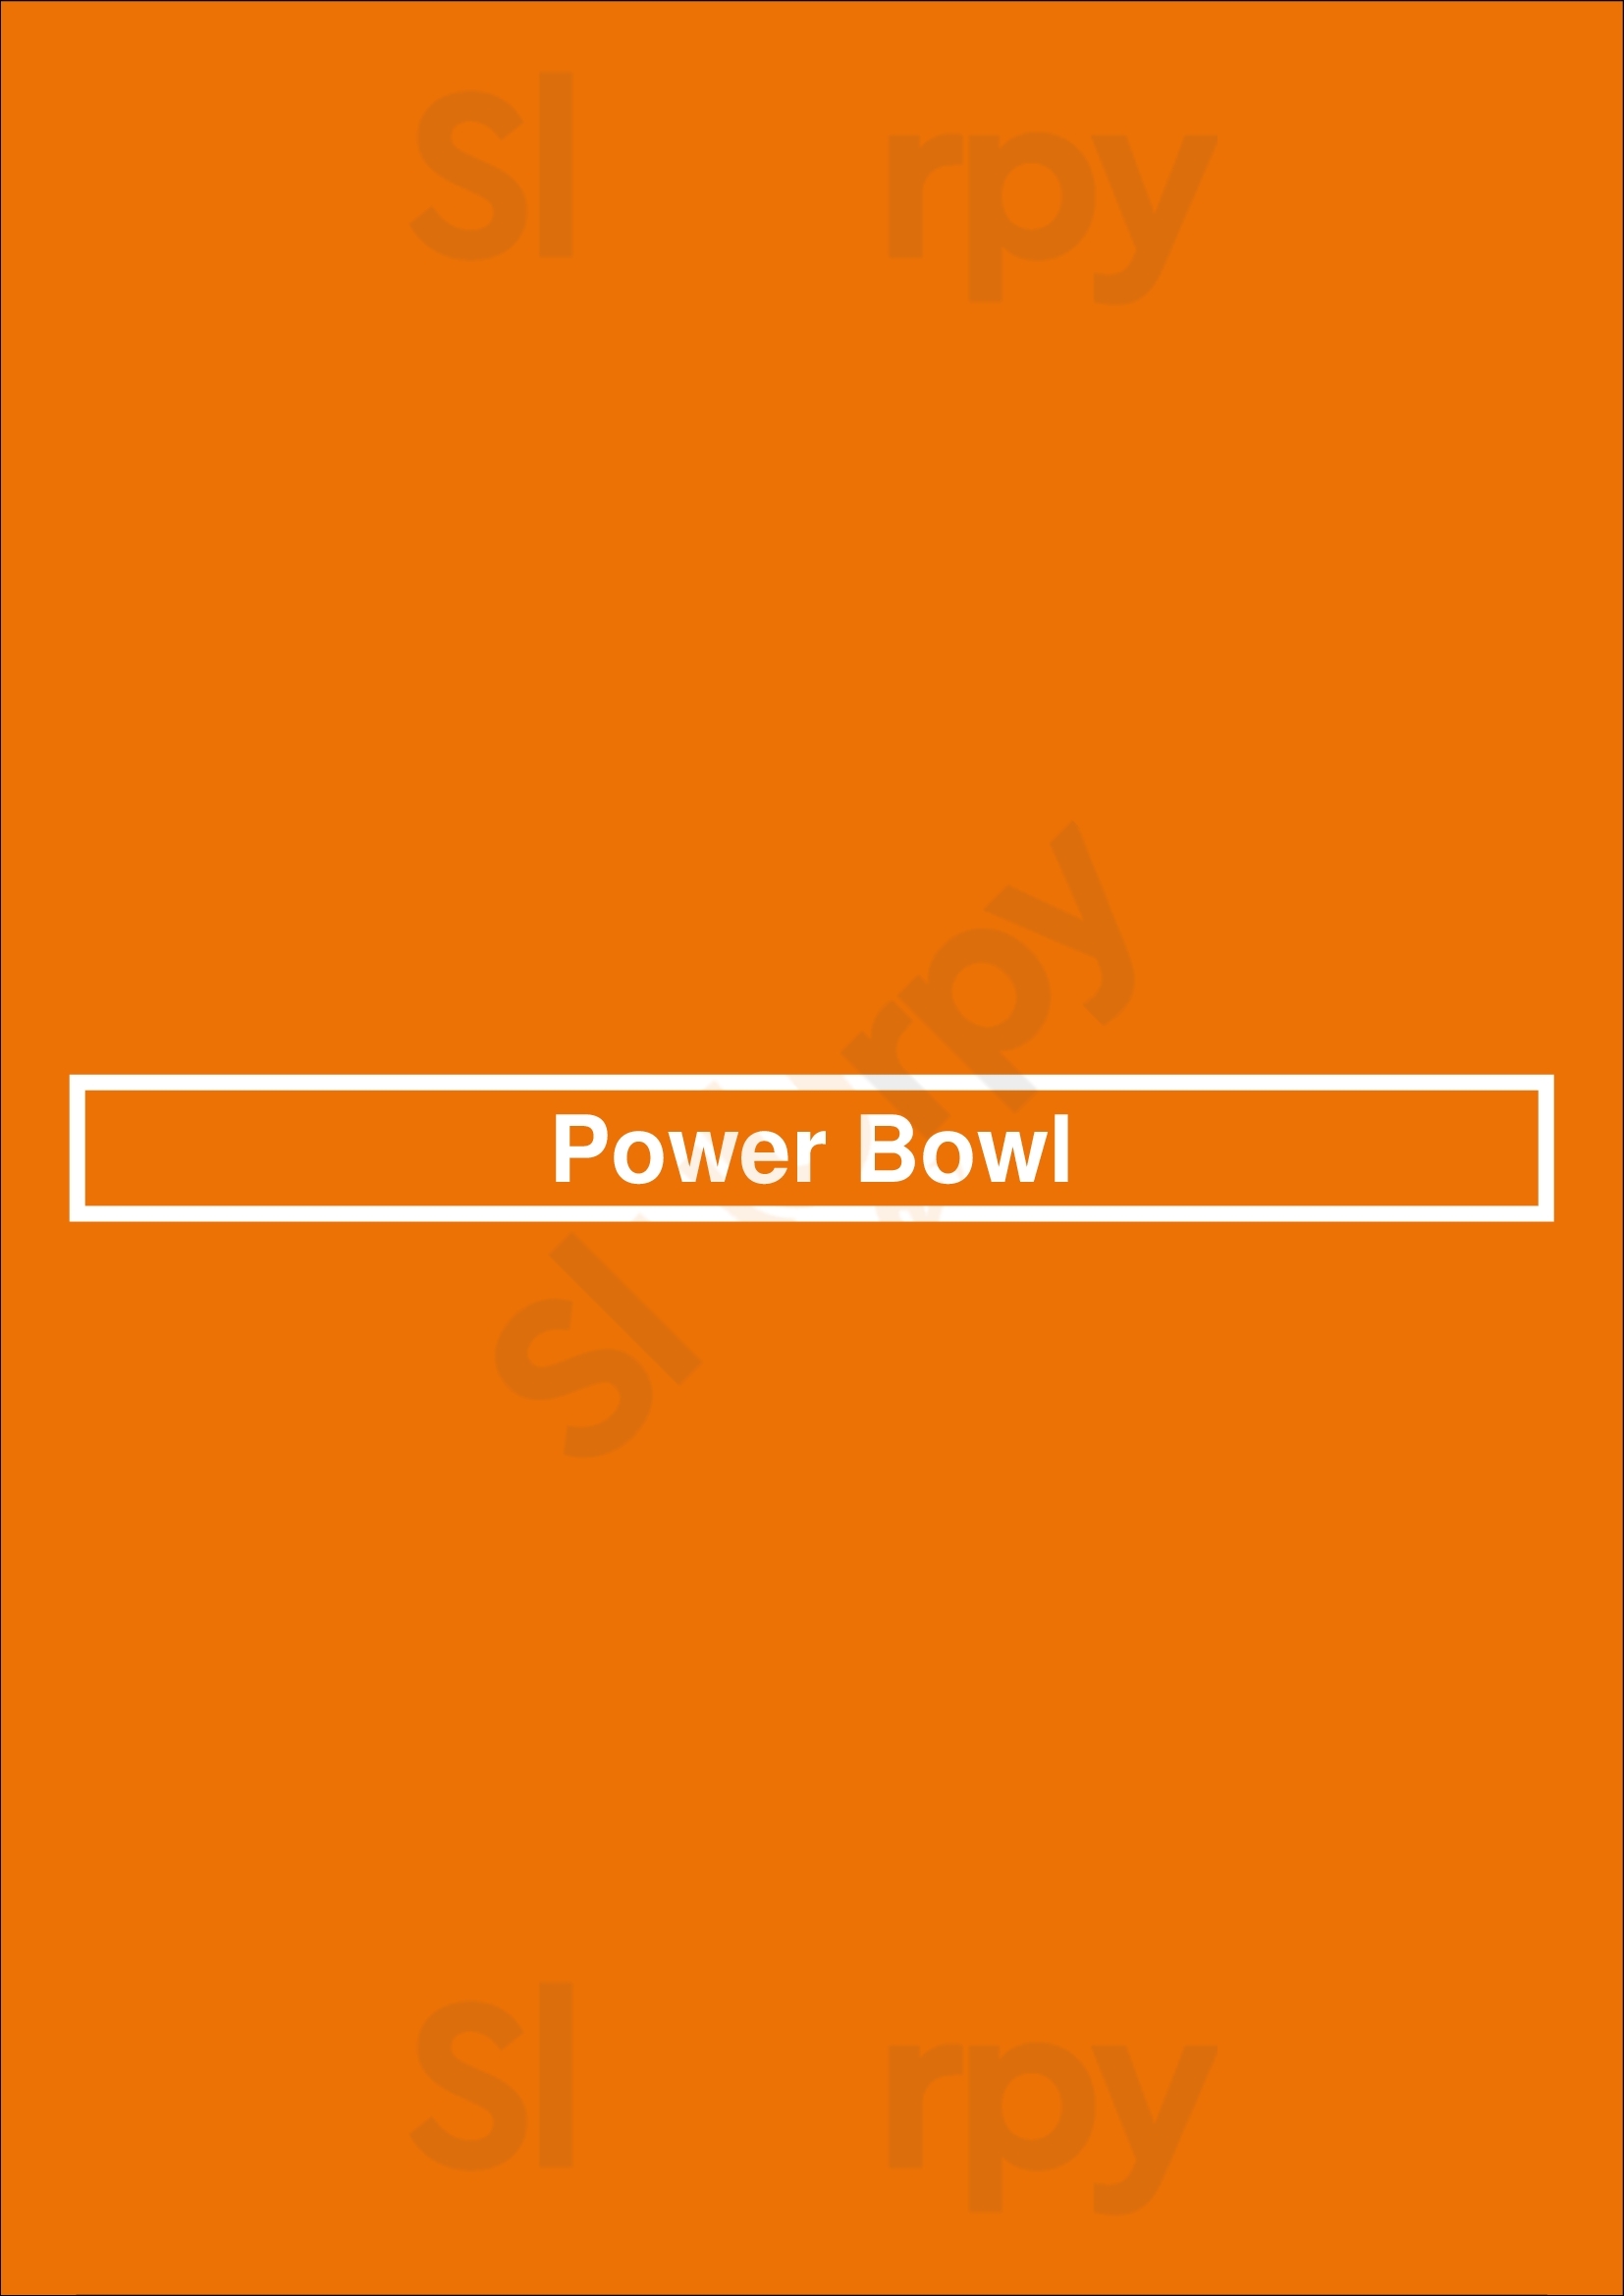 Power Bowl San Jose Menu - 1